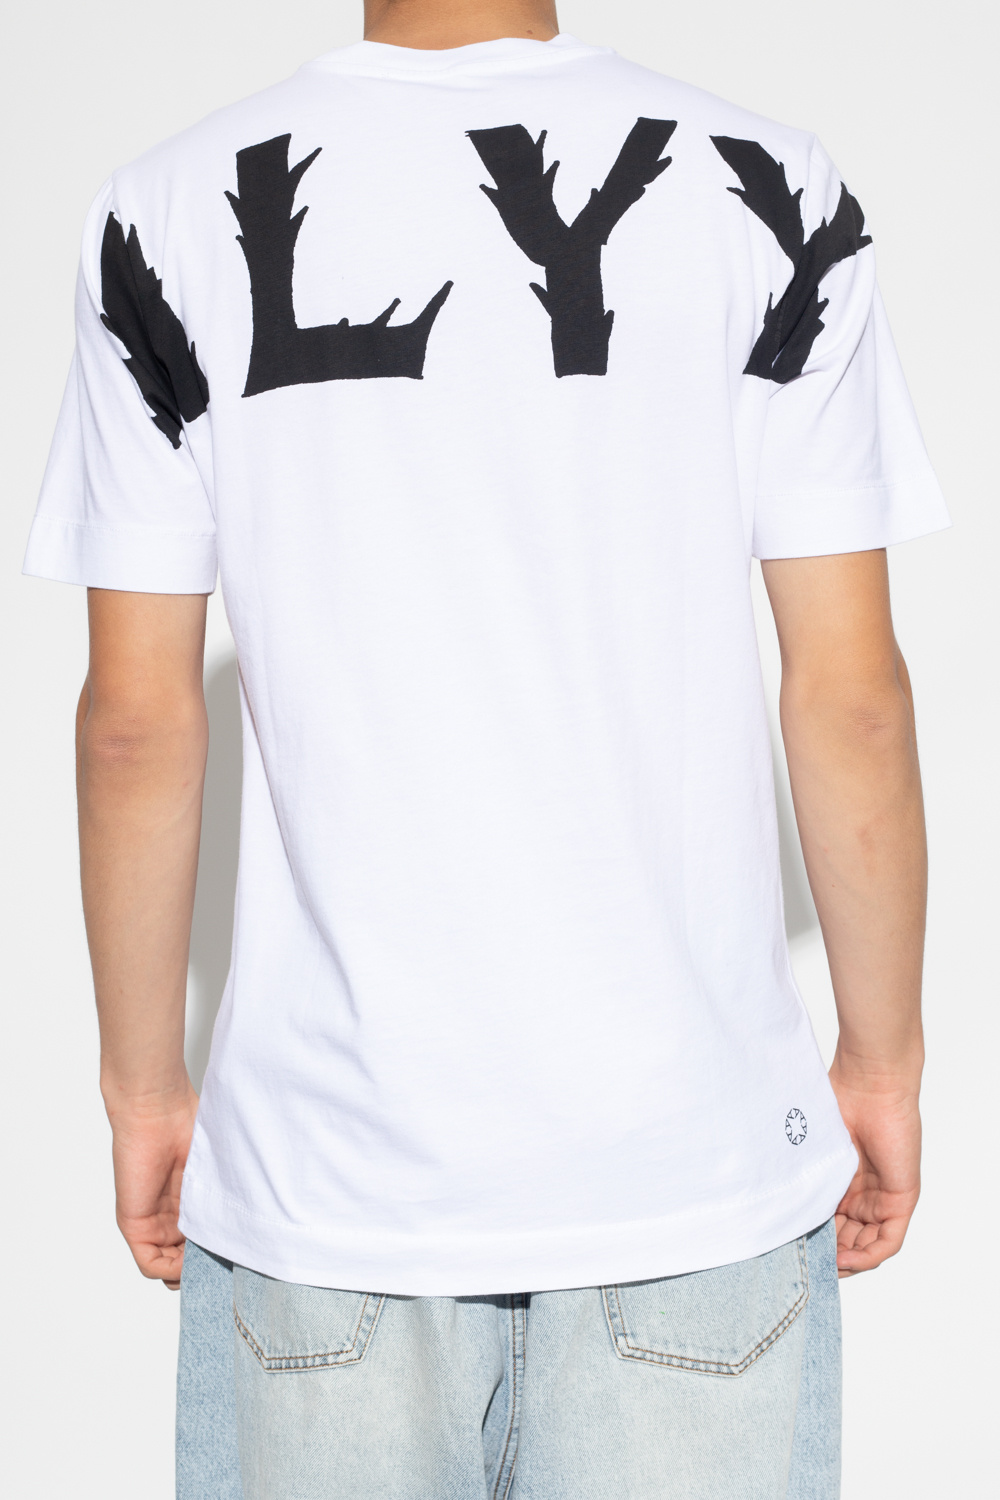 1017 ALYX 9SM Eye T-shirt dress